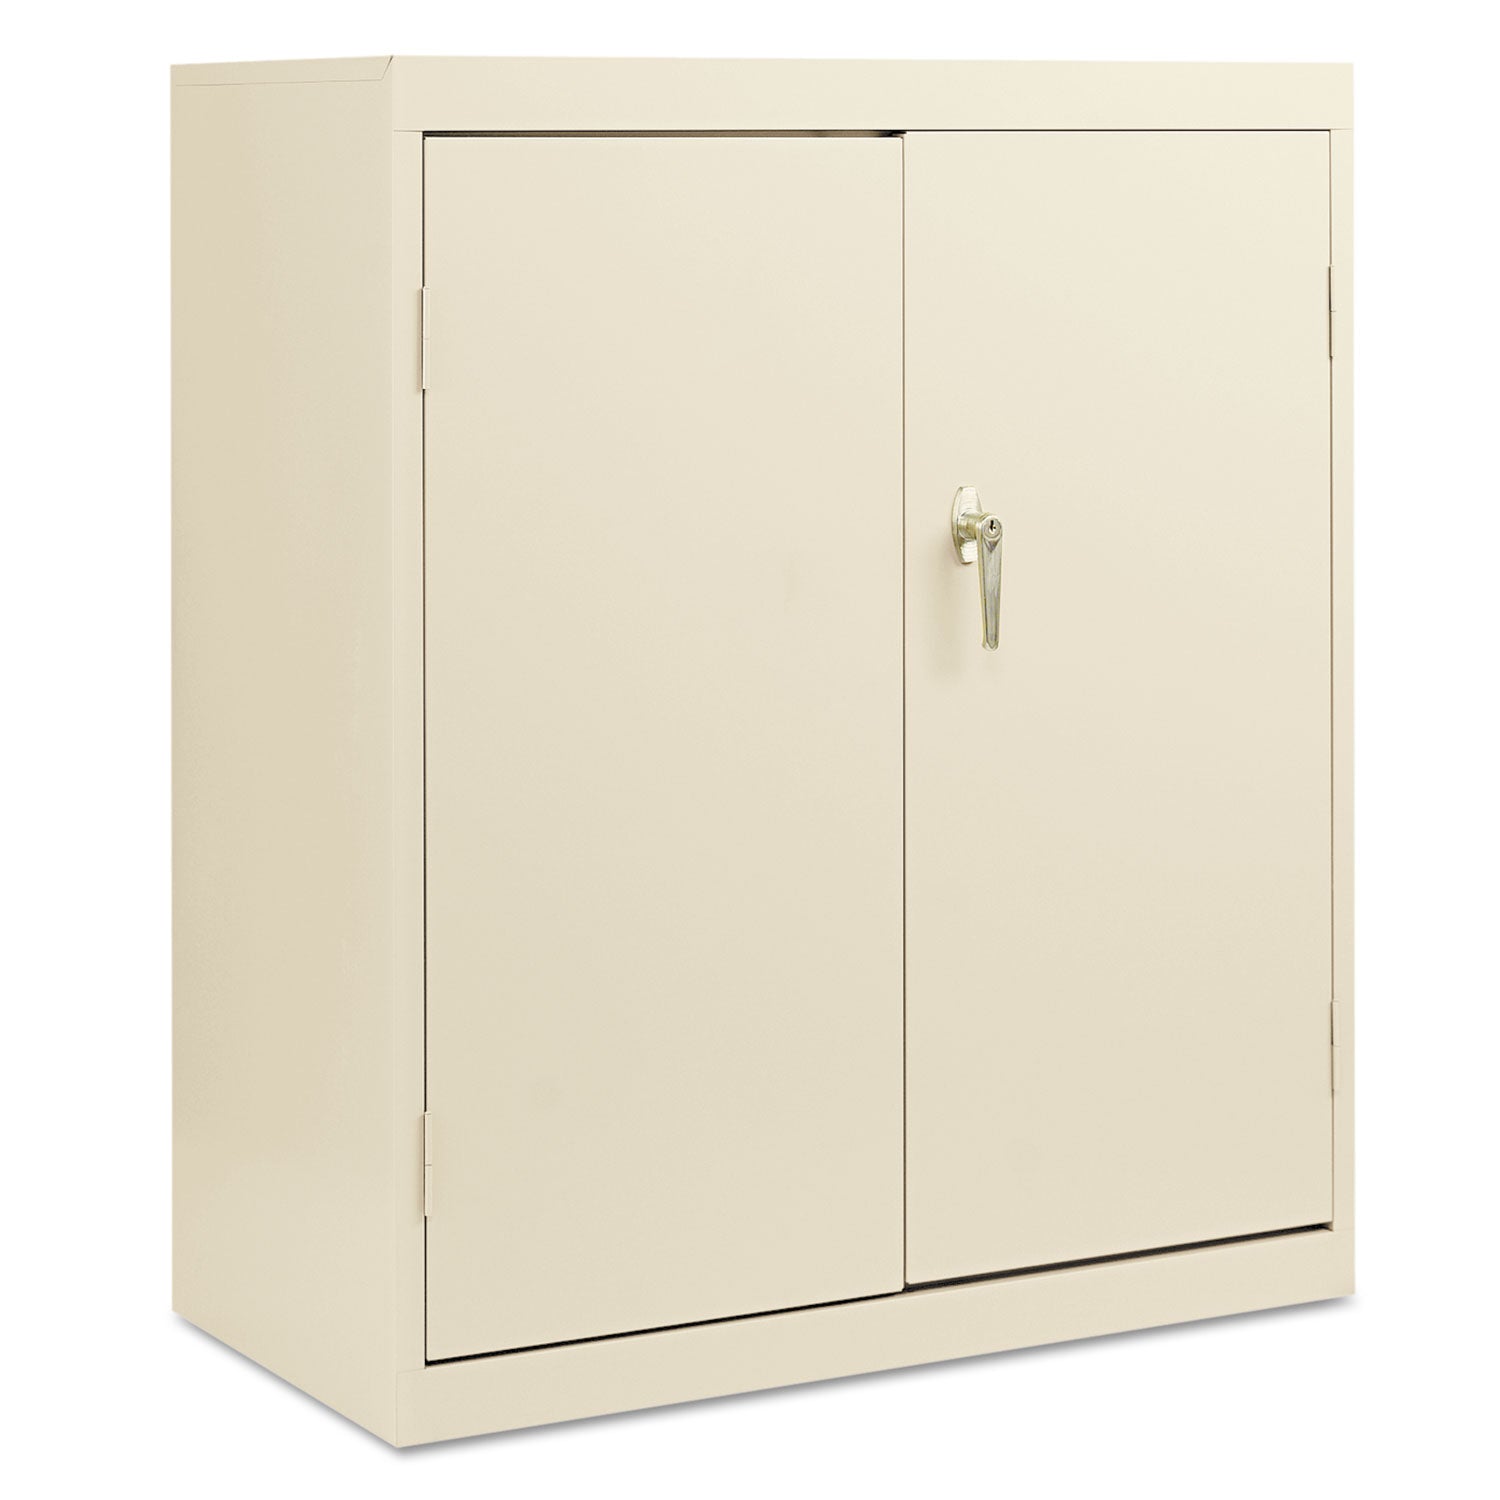 Economy Assembled Storage Cabinet, 36w x 18d x 42h, Putty - 